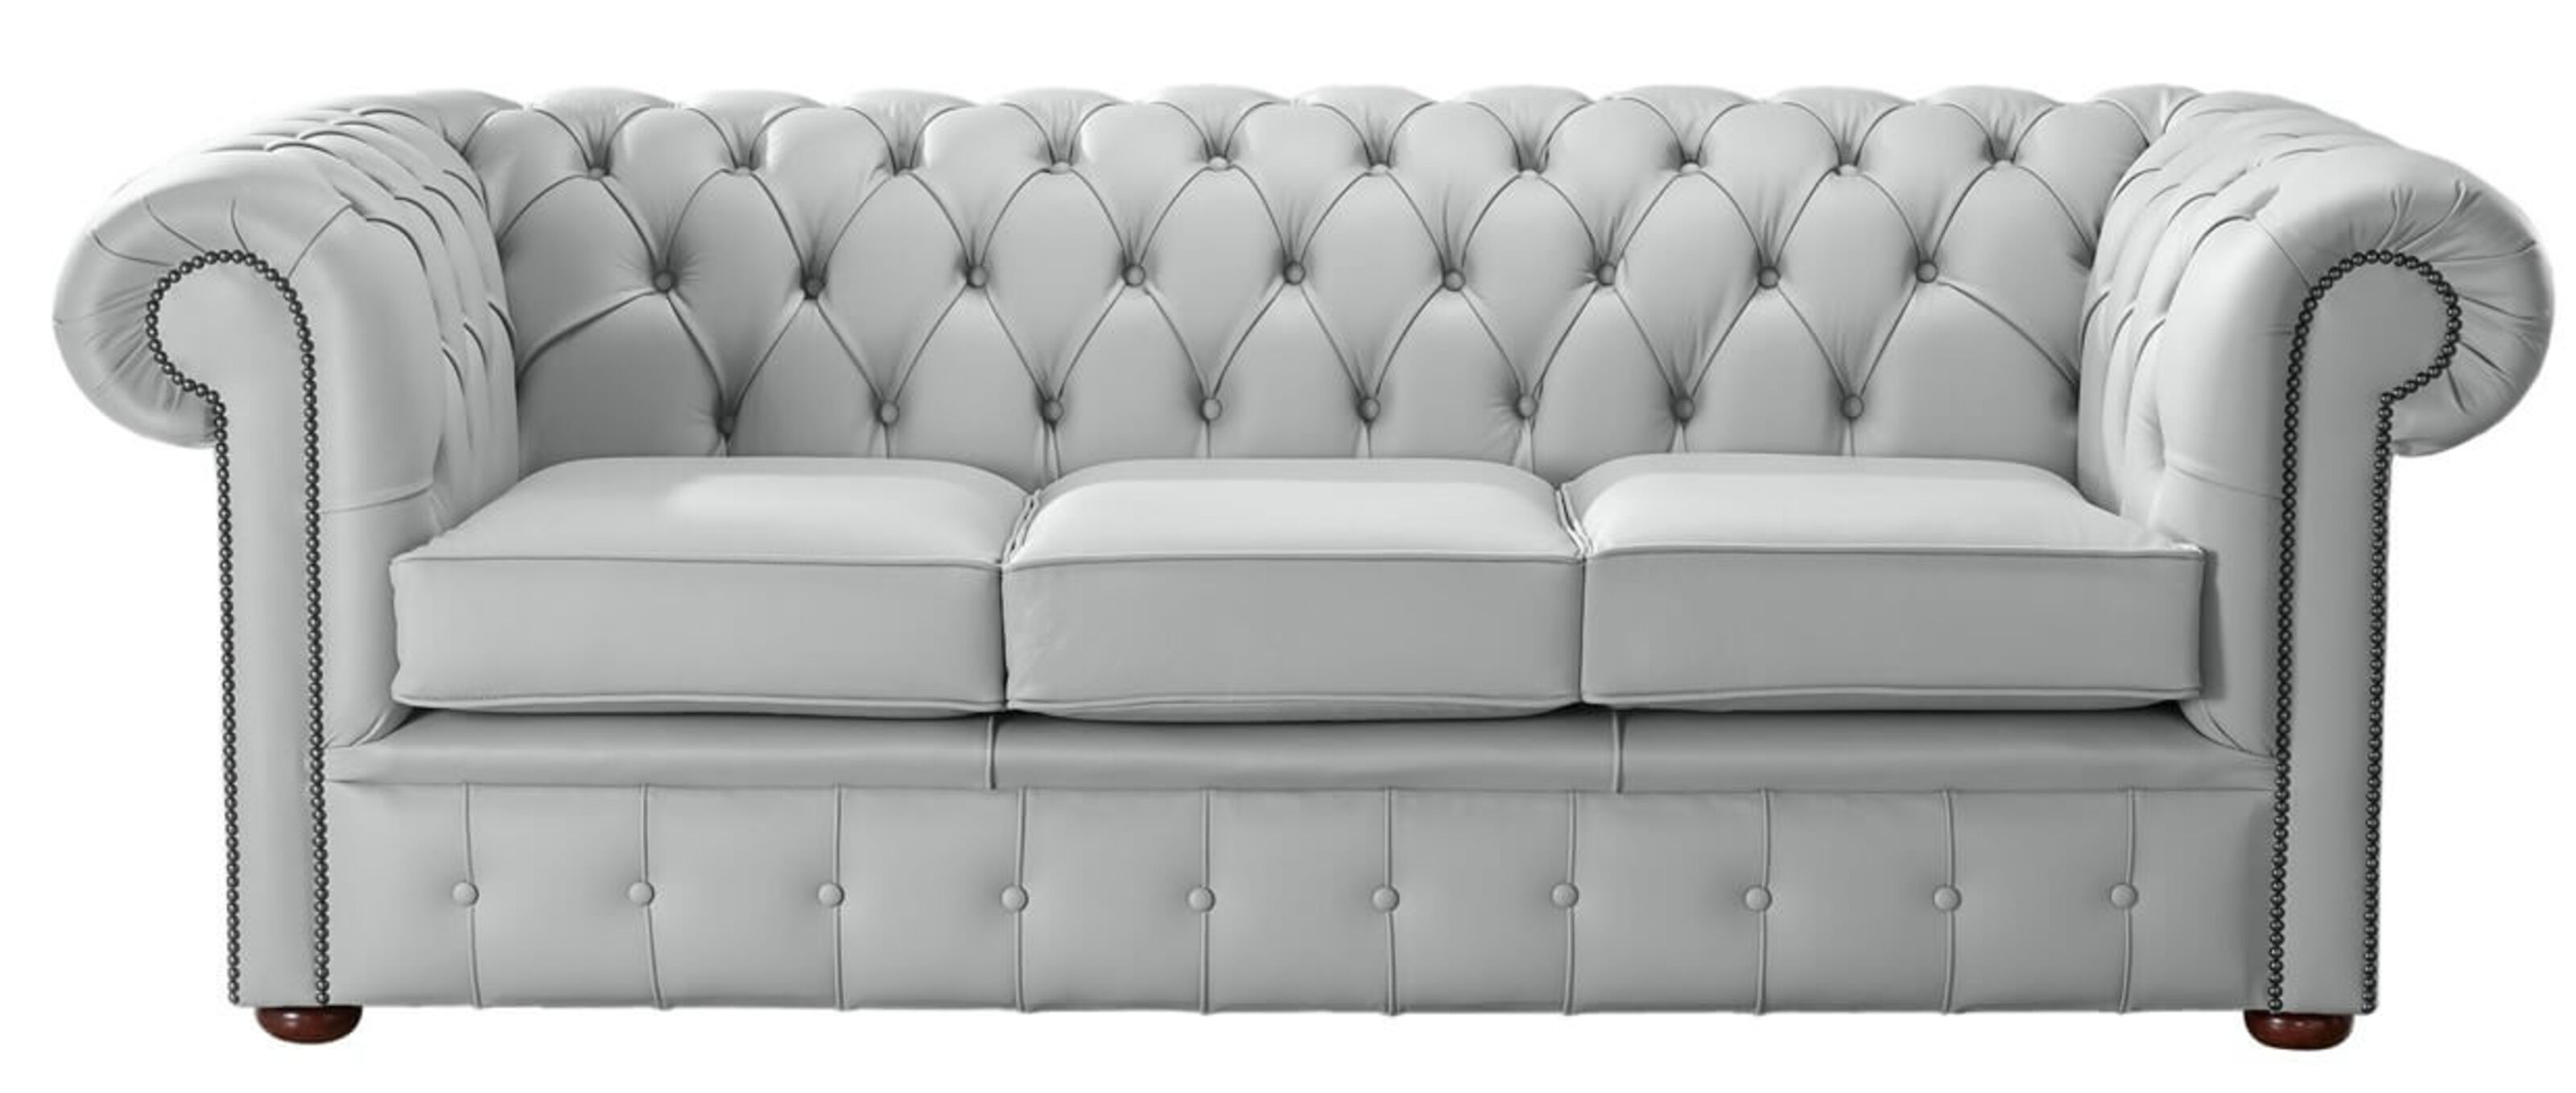 grey leather sofa de